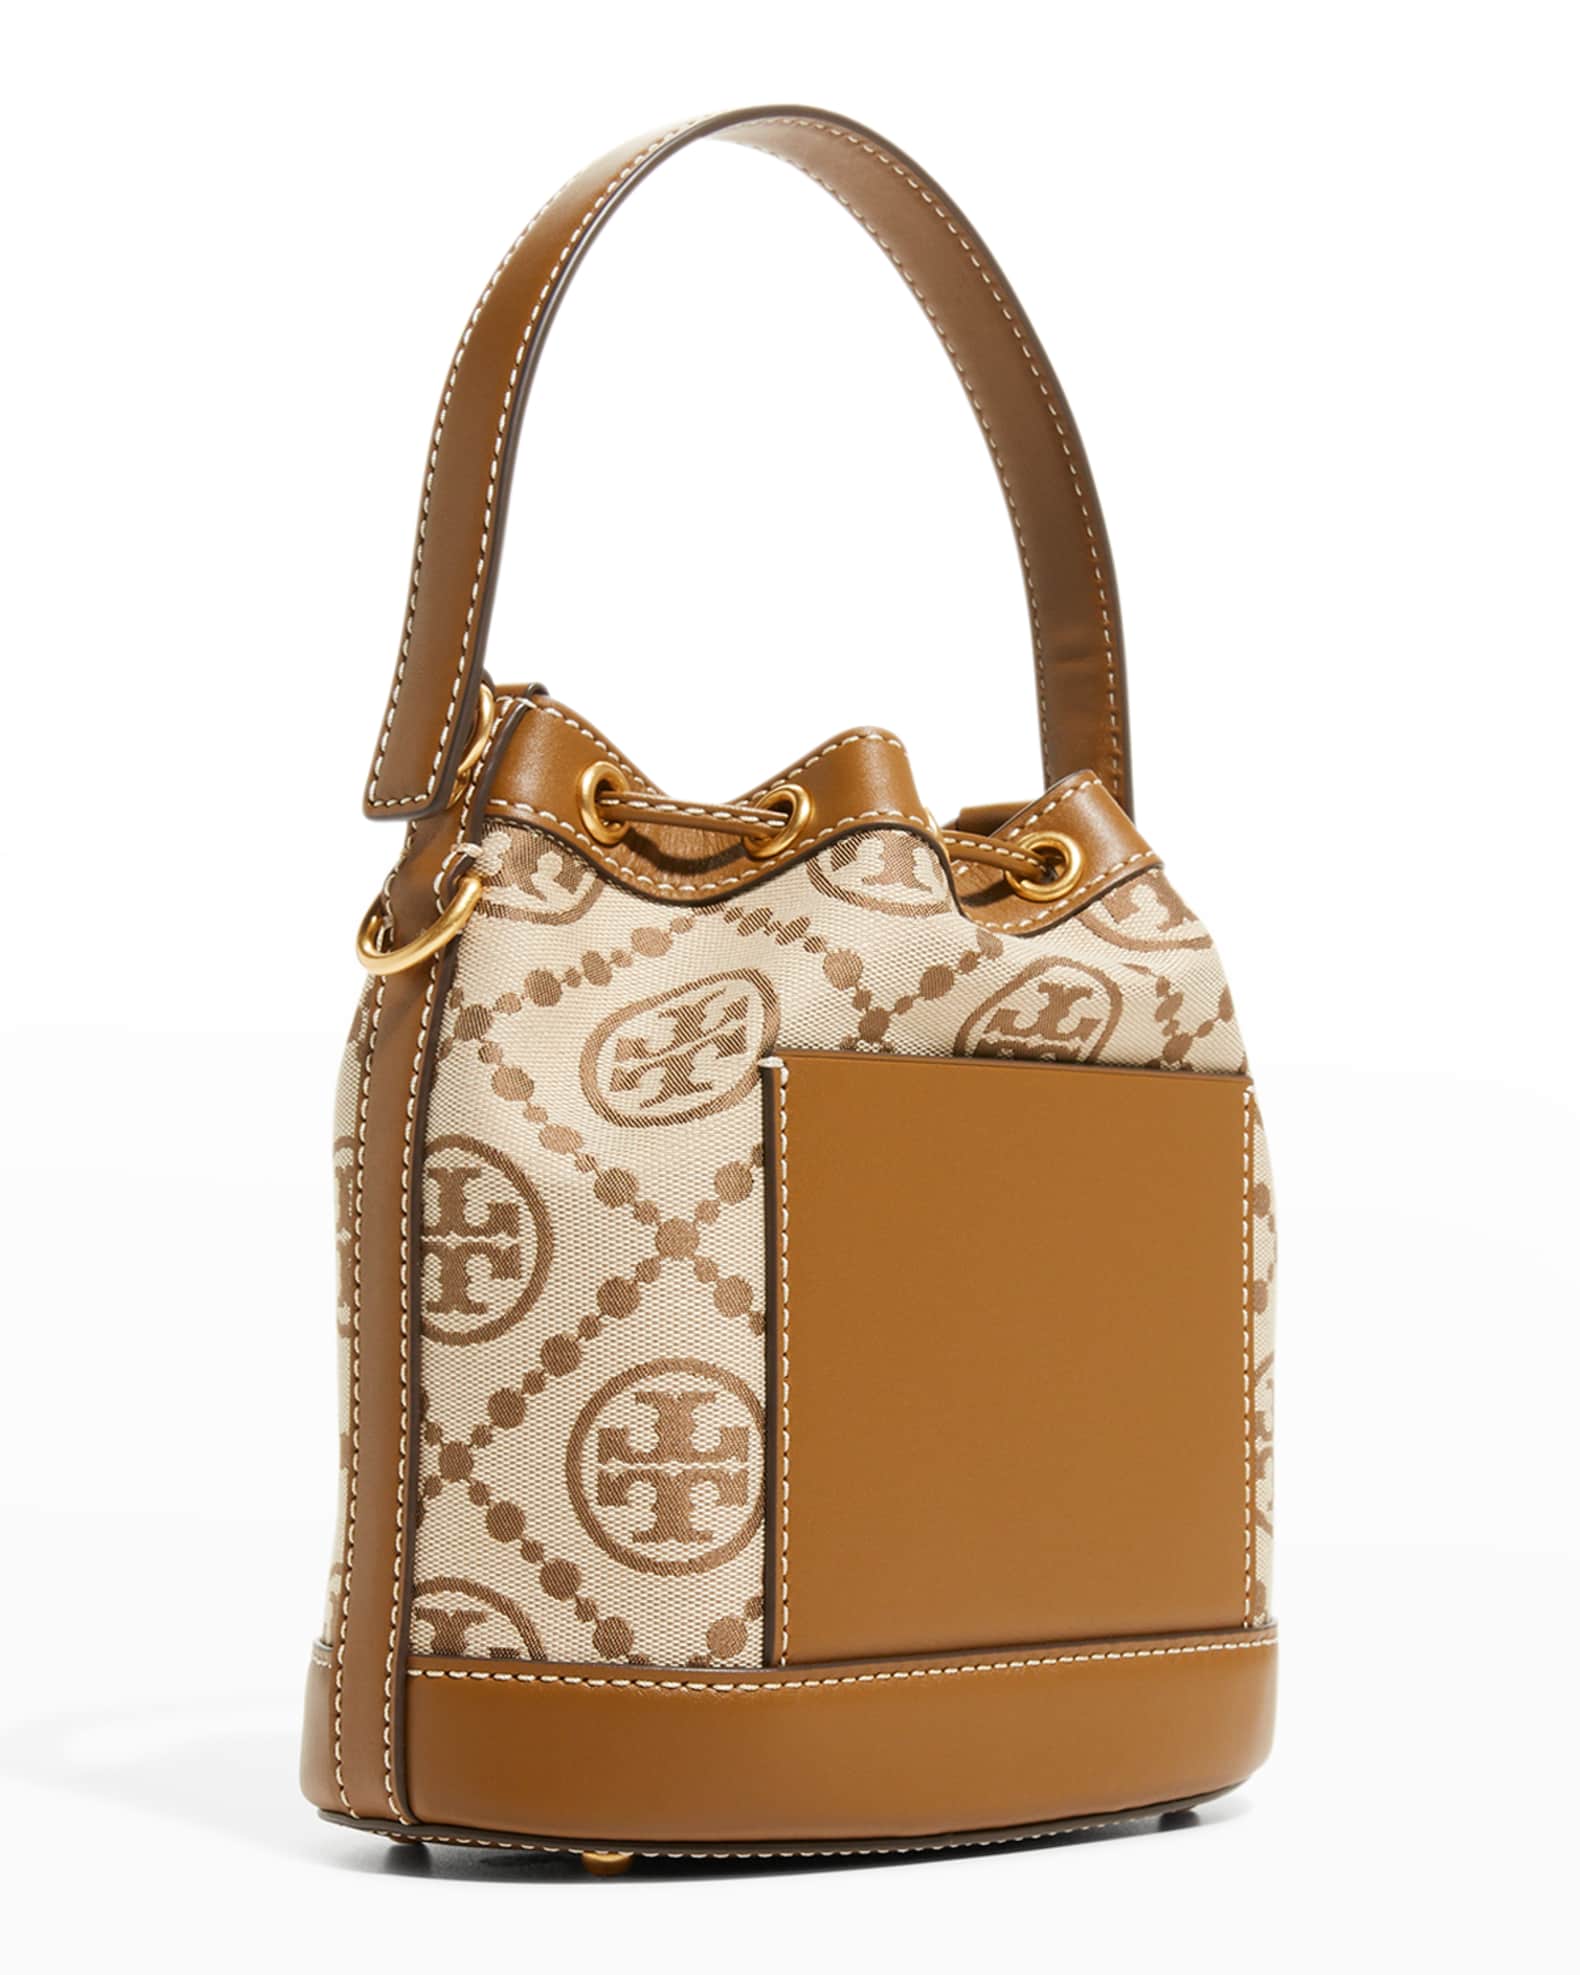 Tory Burch T Monogram Jacquard Mini Duffle Bag Leather Bag Hazel $498